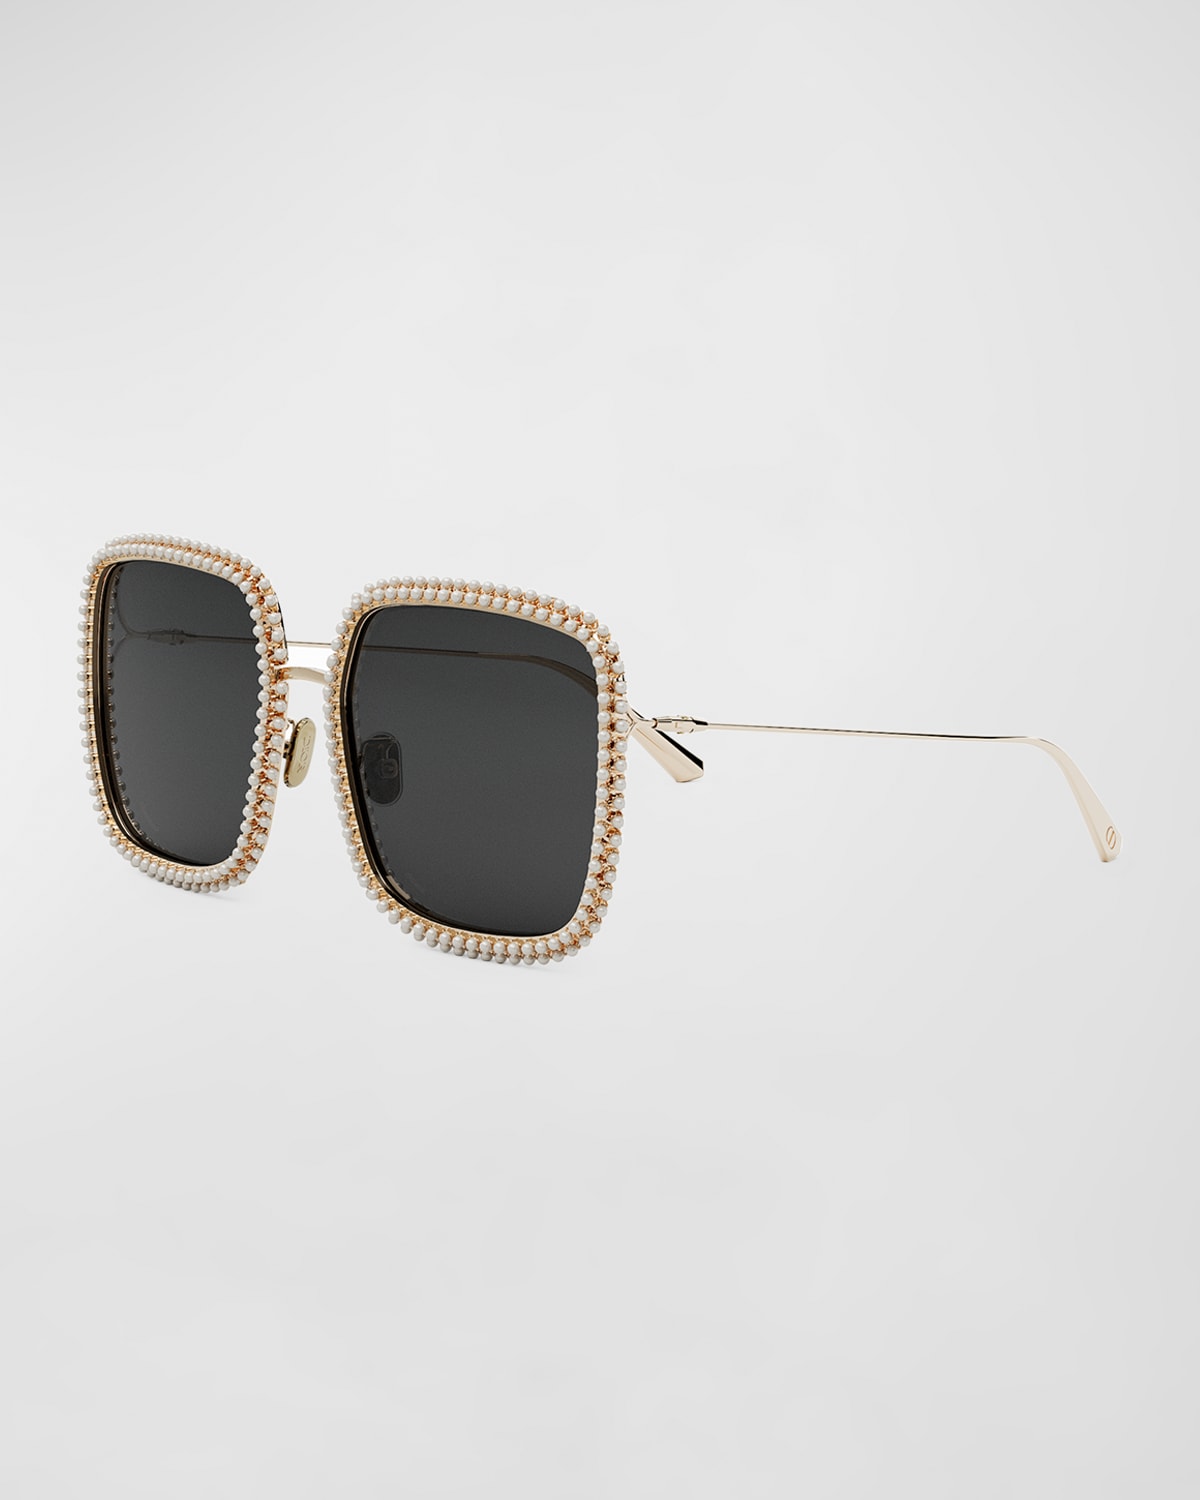 Dior S2u Square Sunglasses, 59mm In Gold Smoke